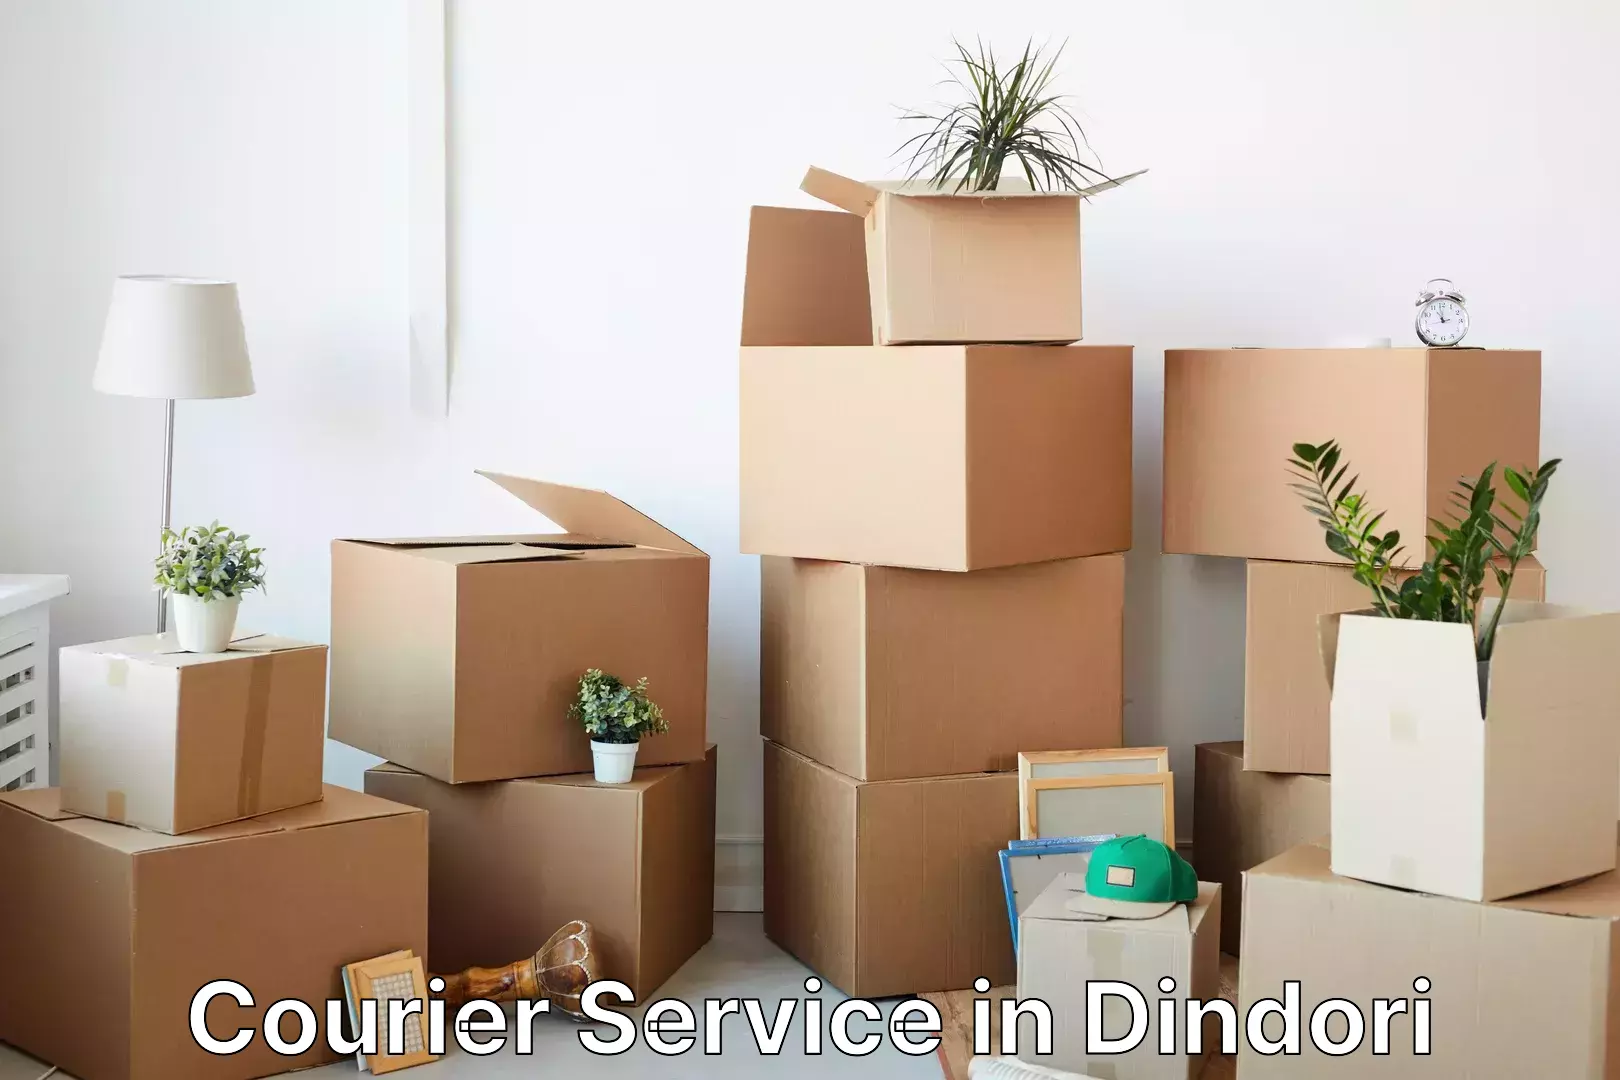 Innovative logistics solutions in Dindori